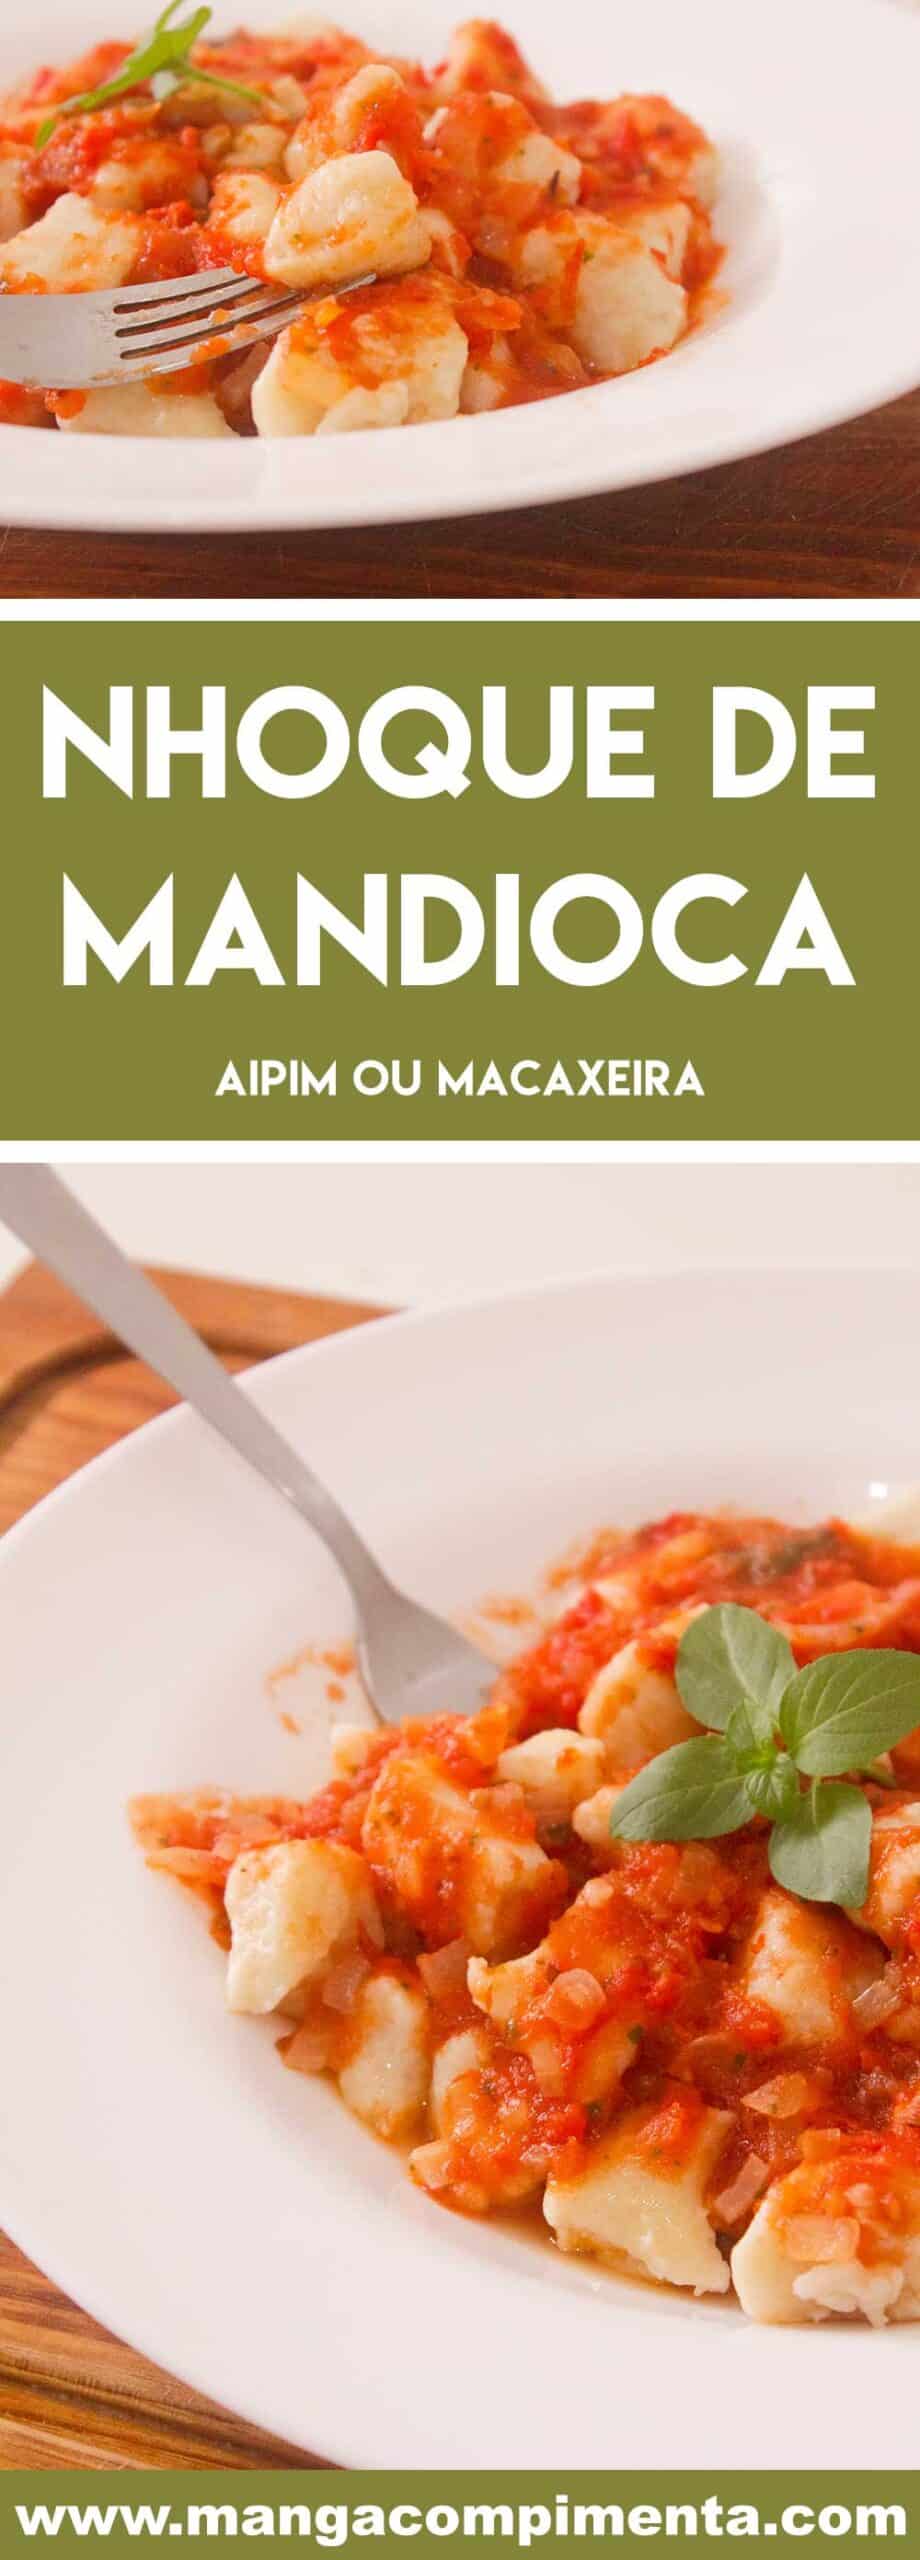 Receita de Nhoque de Mandioca ou Aipim e/ou Macaxeira - um prato delicioso para o almoço de domingo. 